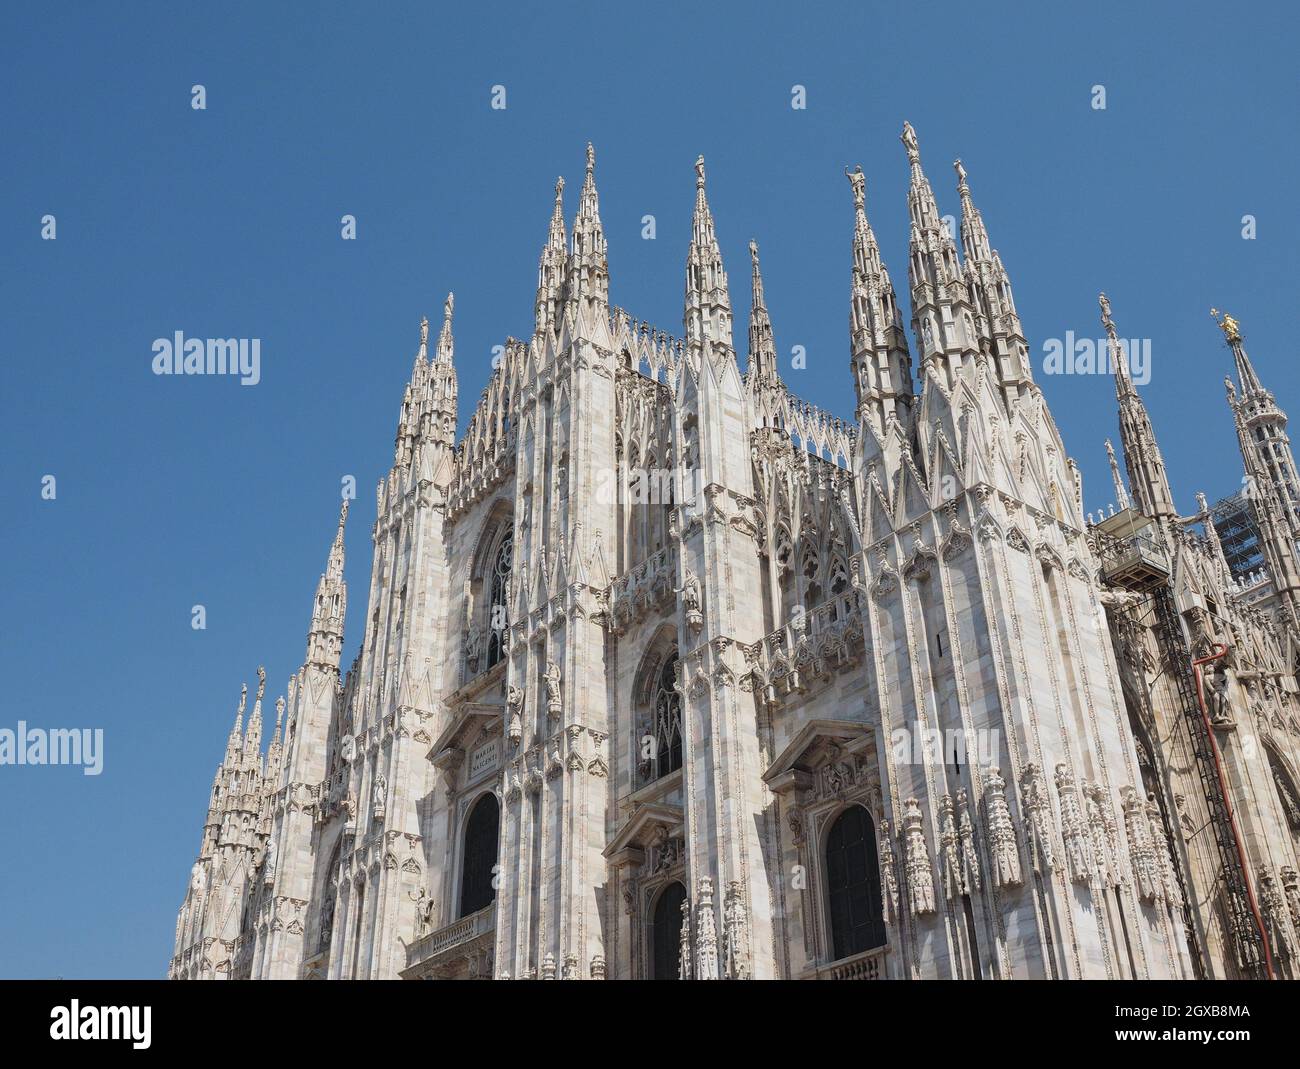 Duomo di Milano (meaning Milan Cathedral) church in Milan, Italy. Stock Photo